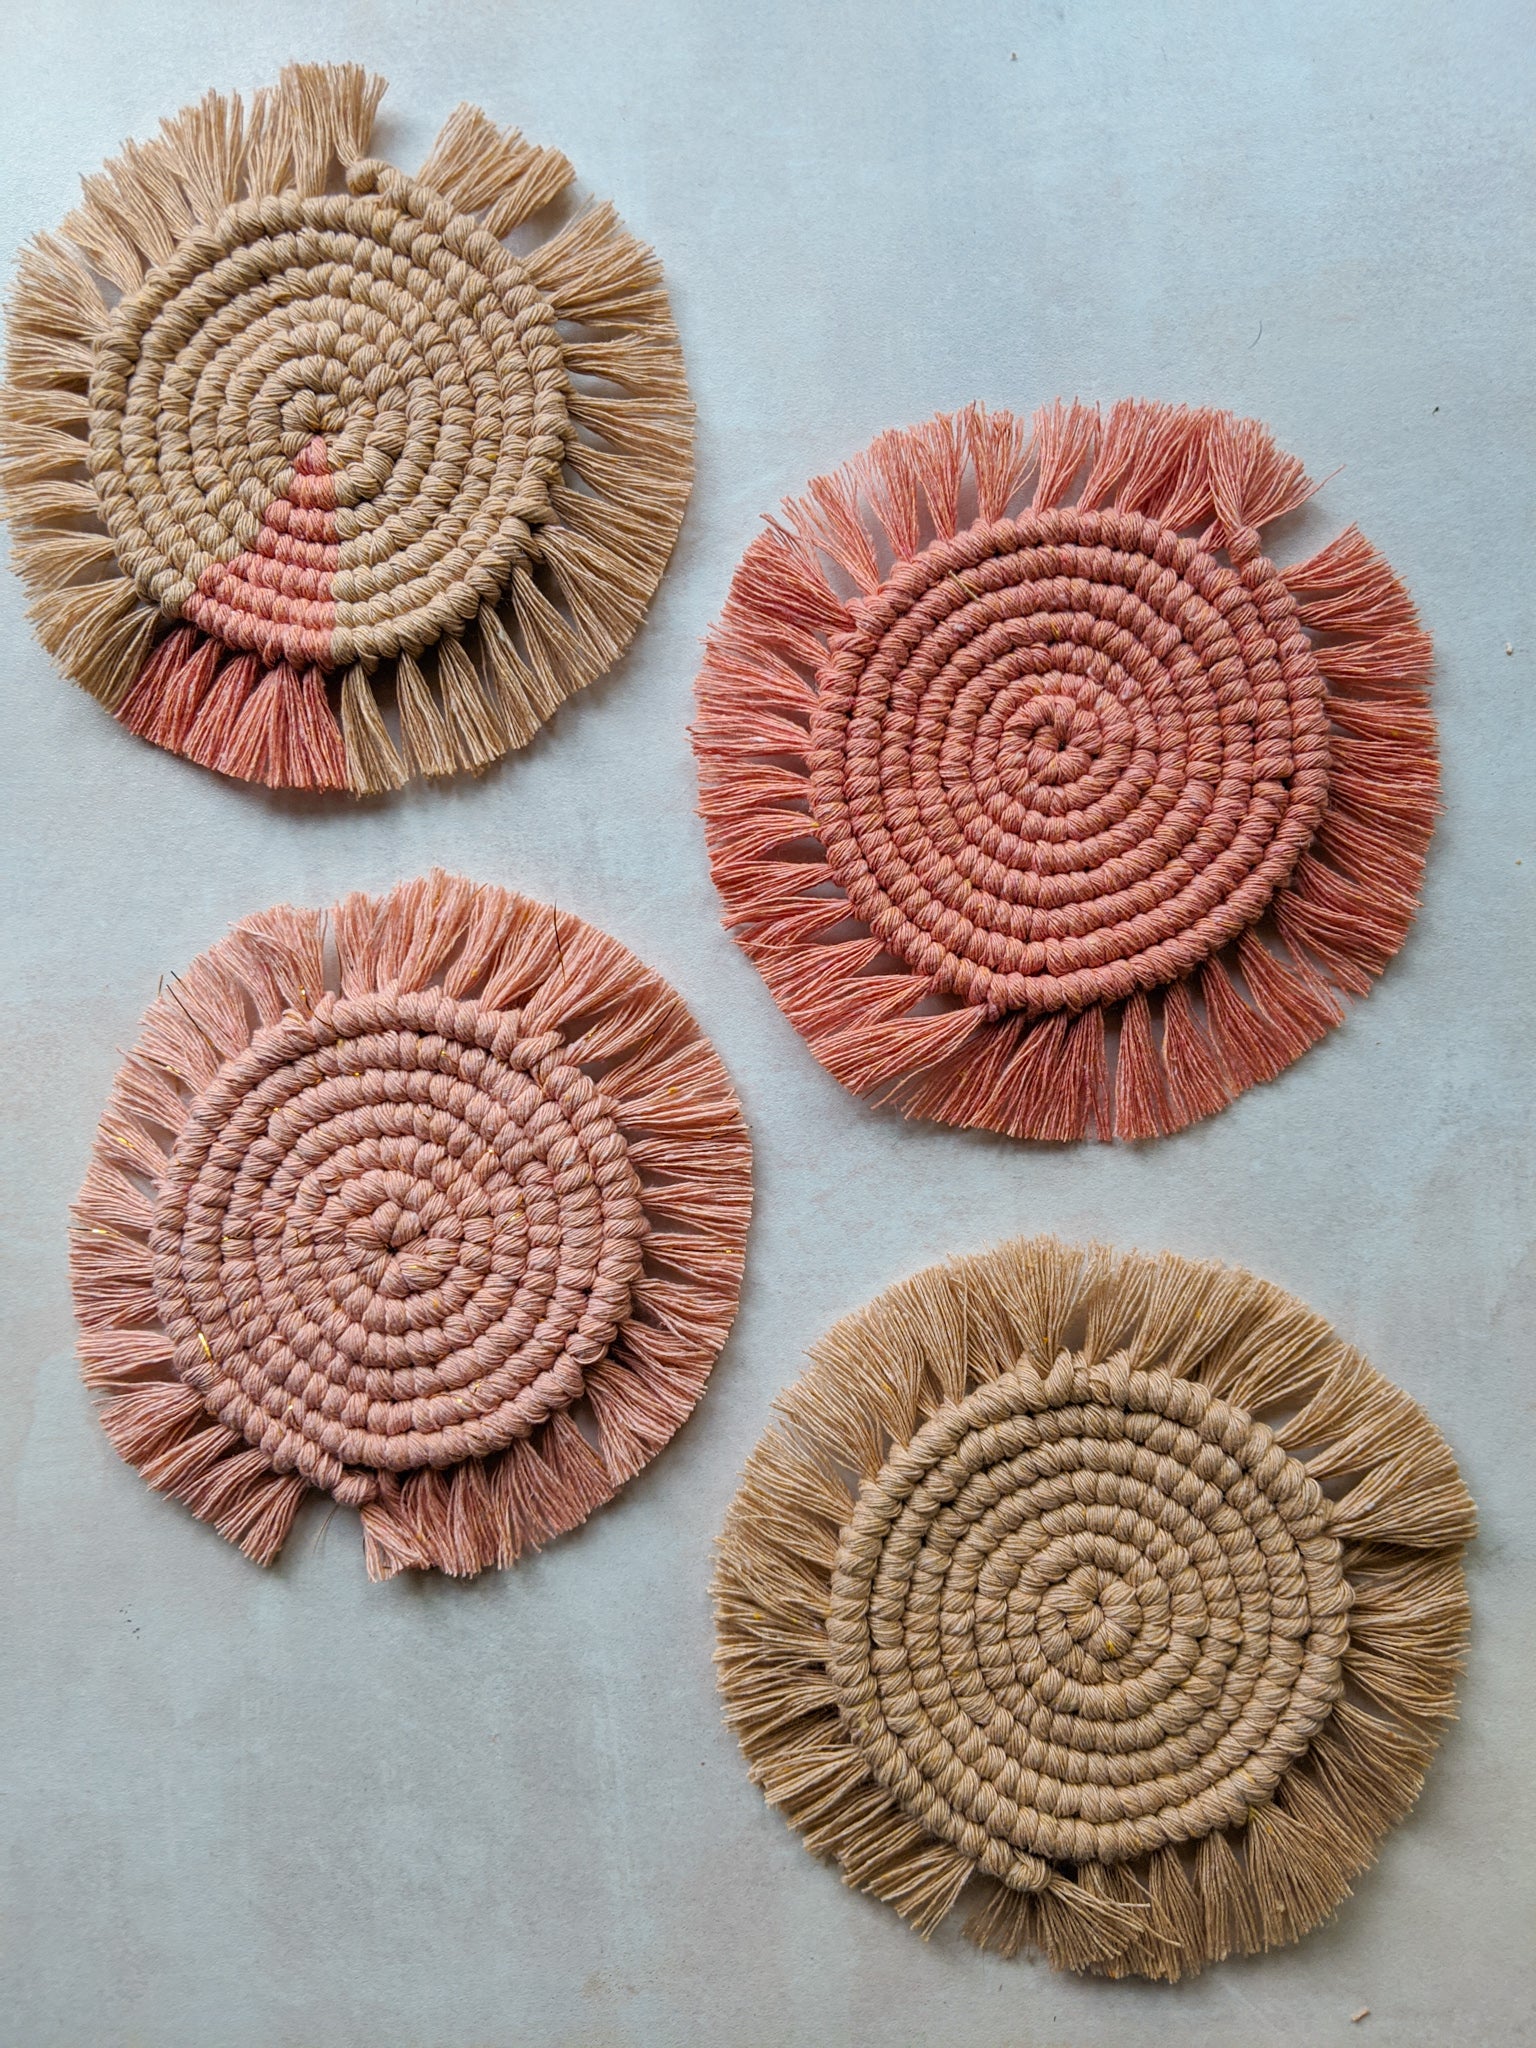 COASTER // Handmade Boho Macrame Coasters